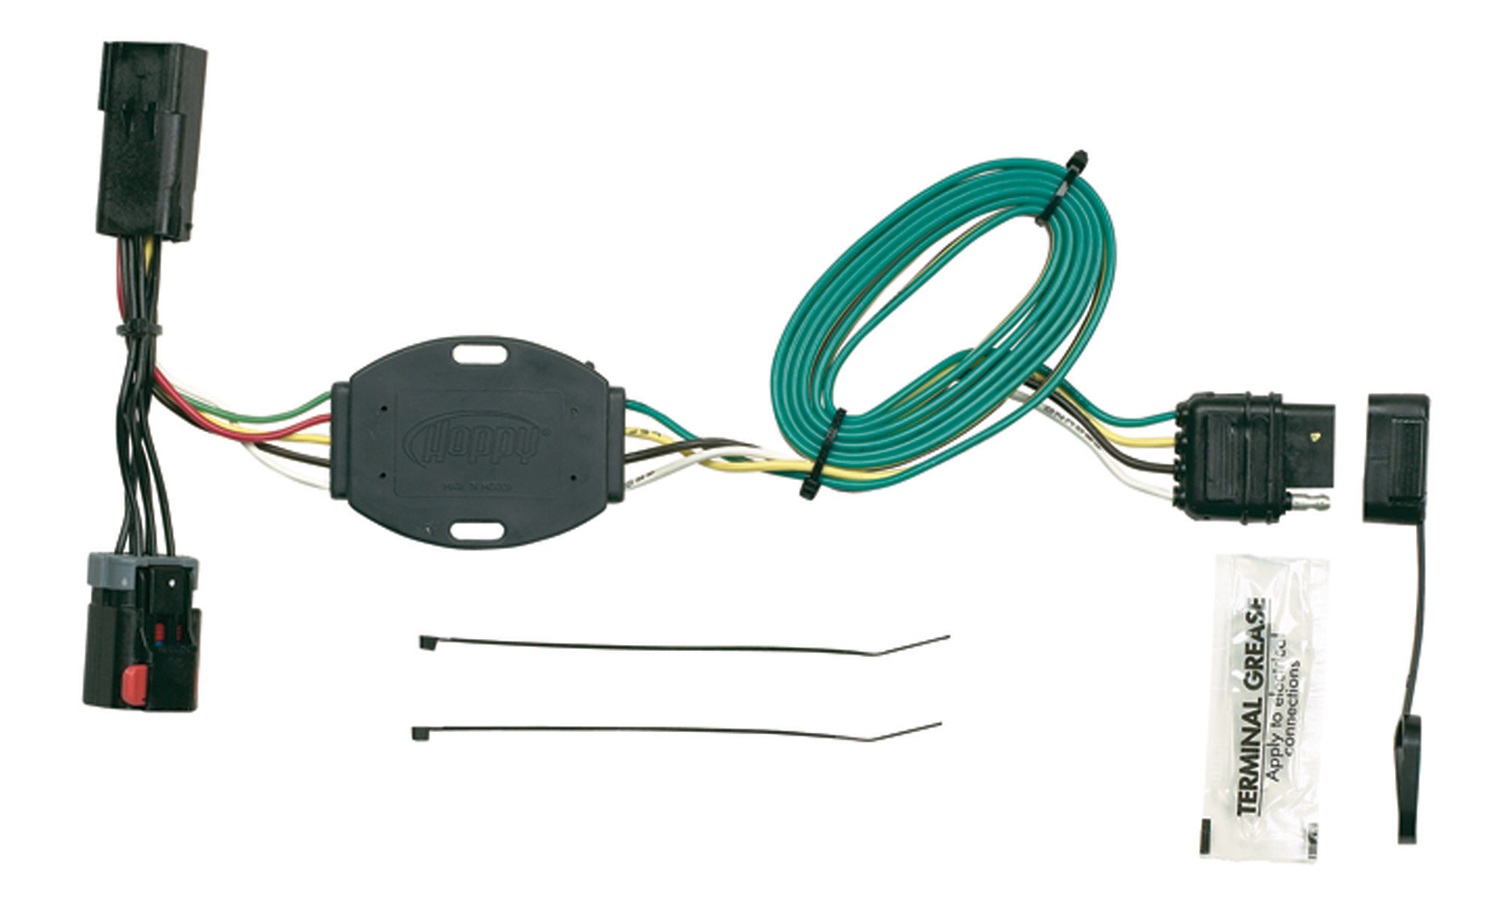 hopkins 40950 wiring diagram